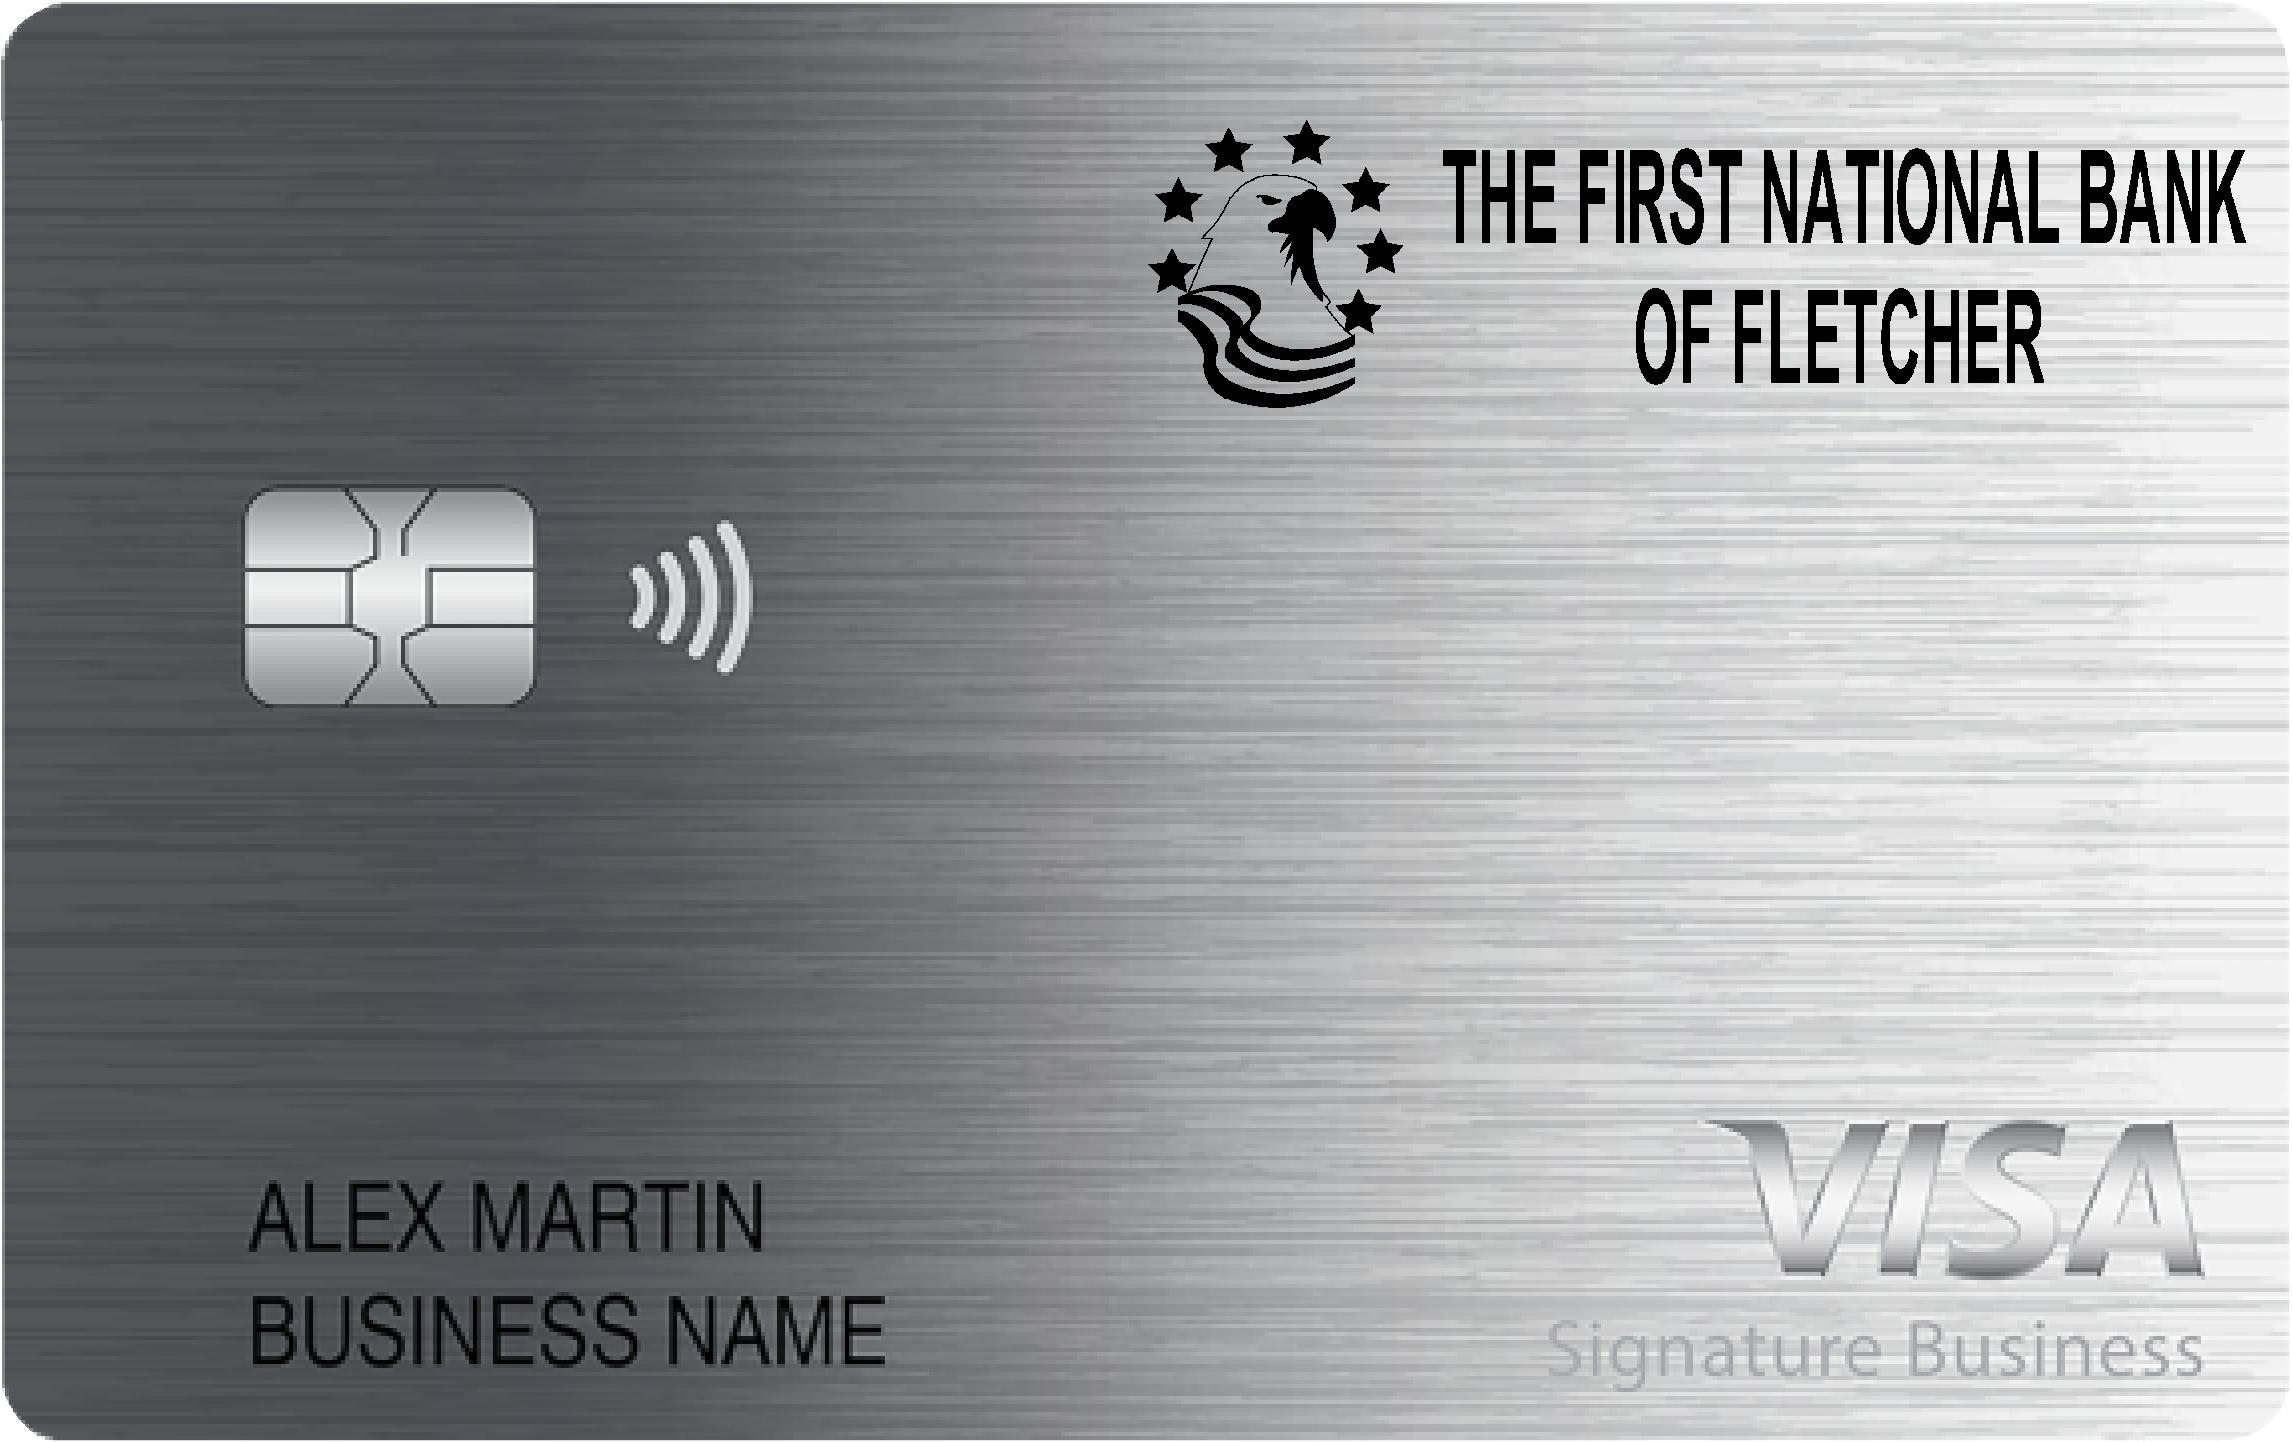 The First National Bank of Fletcher Smart Business Rewards Card